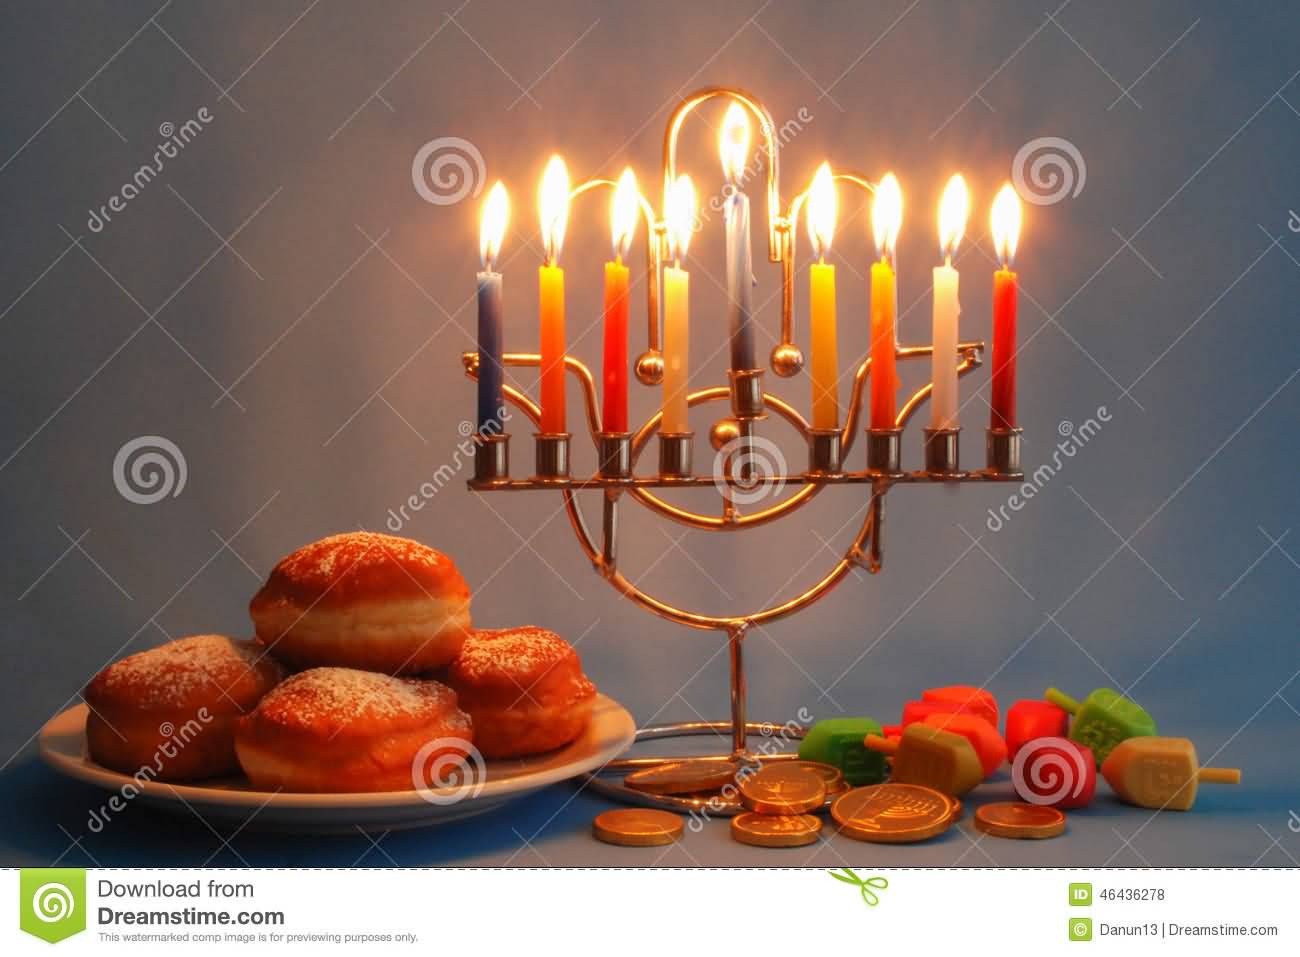 Chanukah Symbols Menorah, Candles, Donuts, Dreidels, Chocolate, Coins